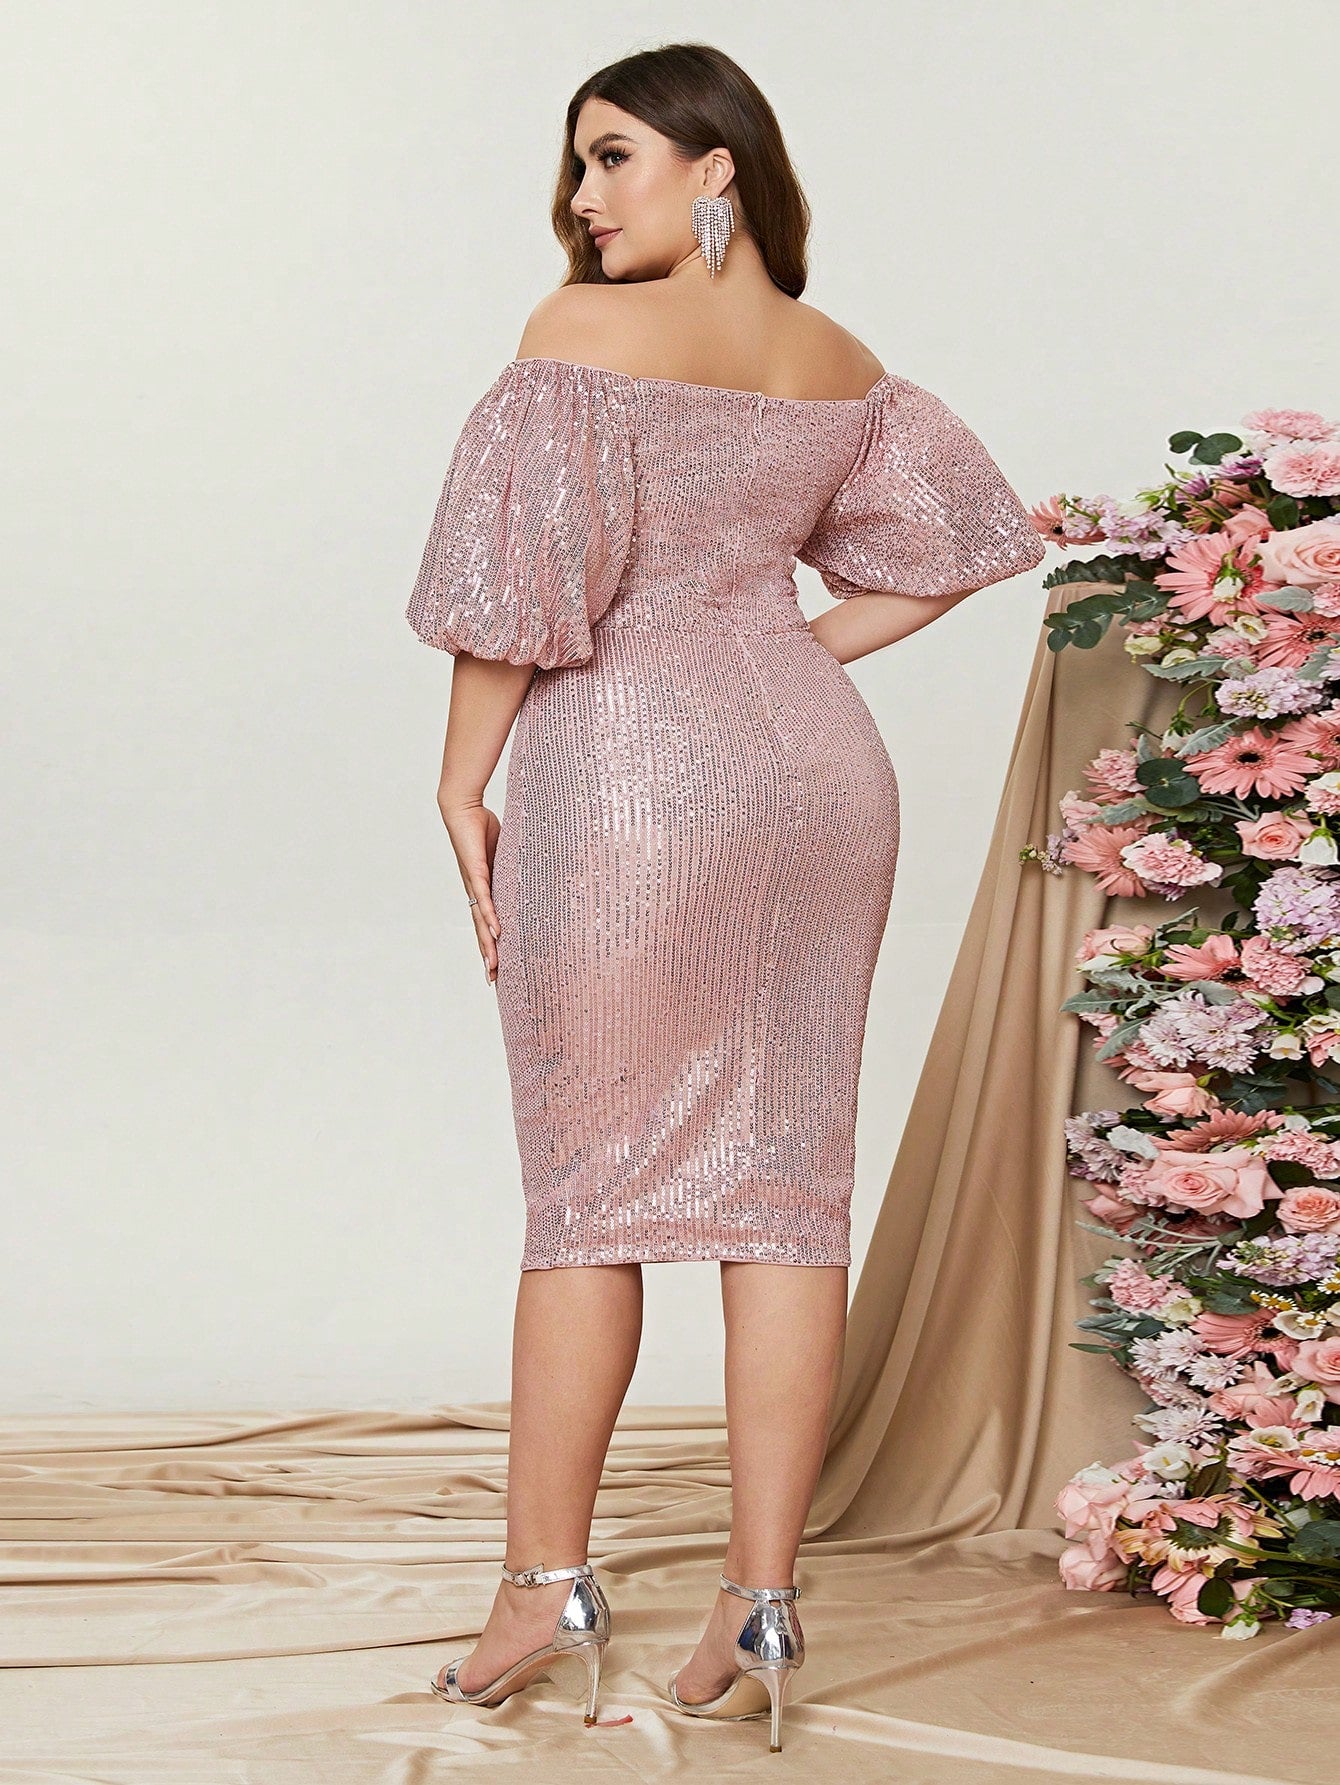 Glamorous Plus-Size Sequin Dress: Chic Off-Shoulder, Form-Fitting Elegance